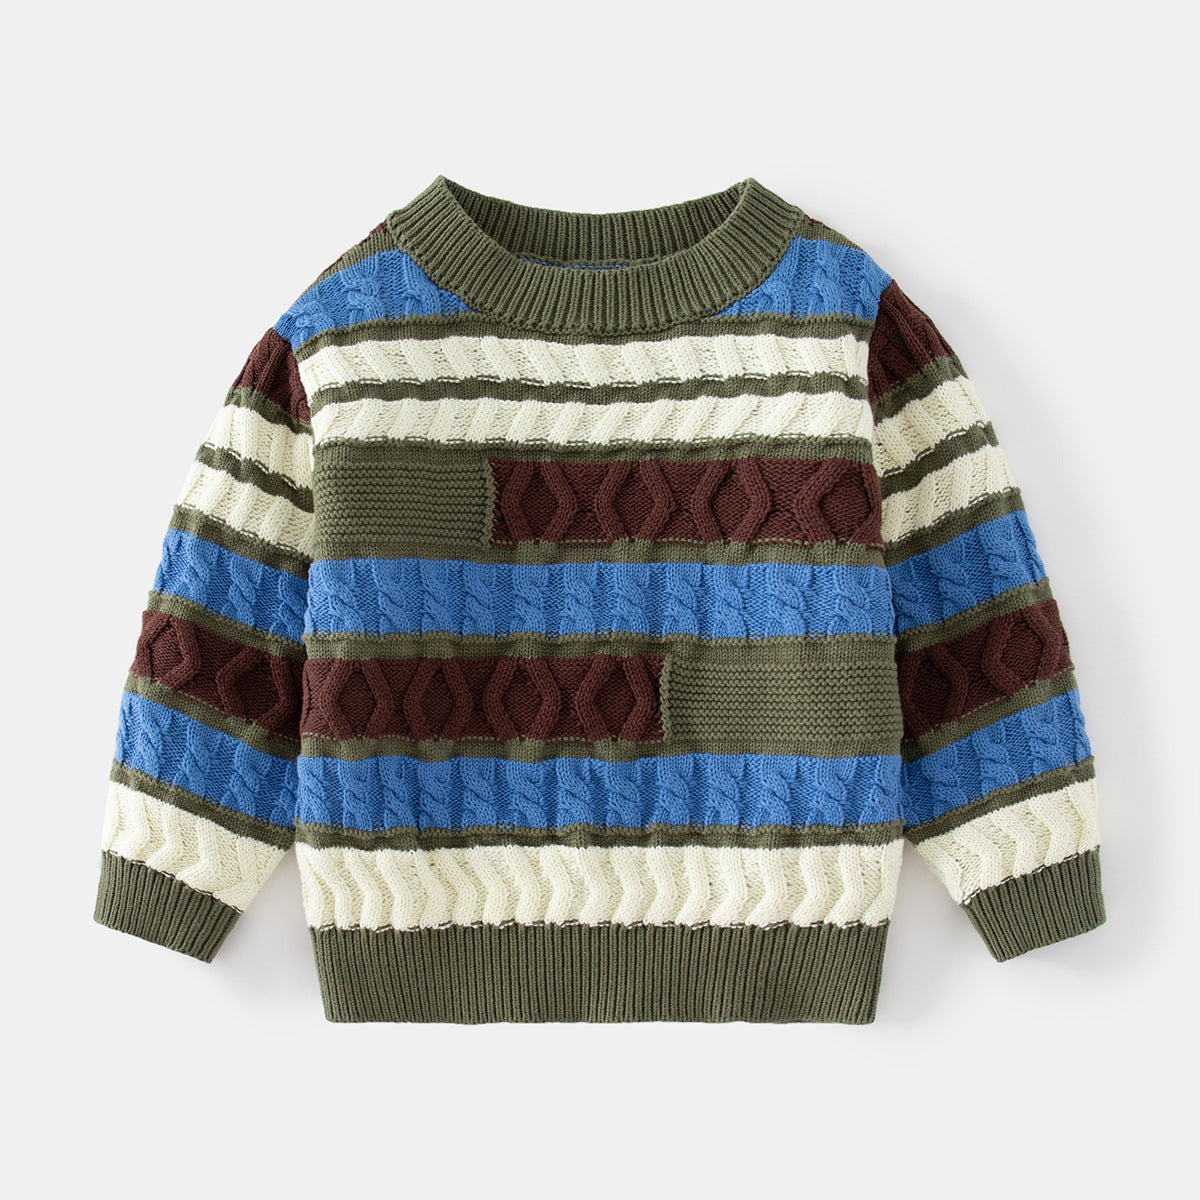 [513697] - Atasan Sweater Rajut Lengan Panjang Import Anak Laki-Laki - Motif Regular Stripe